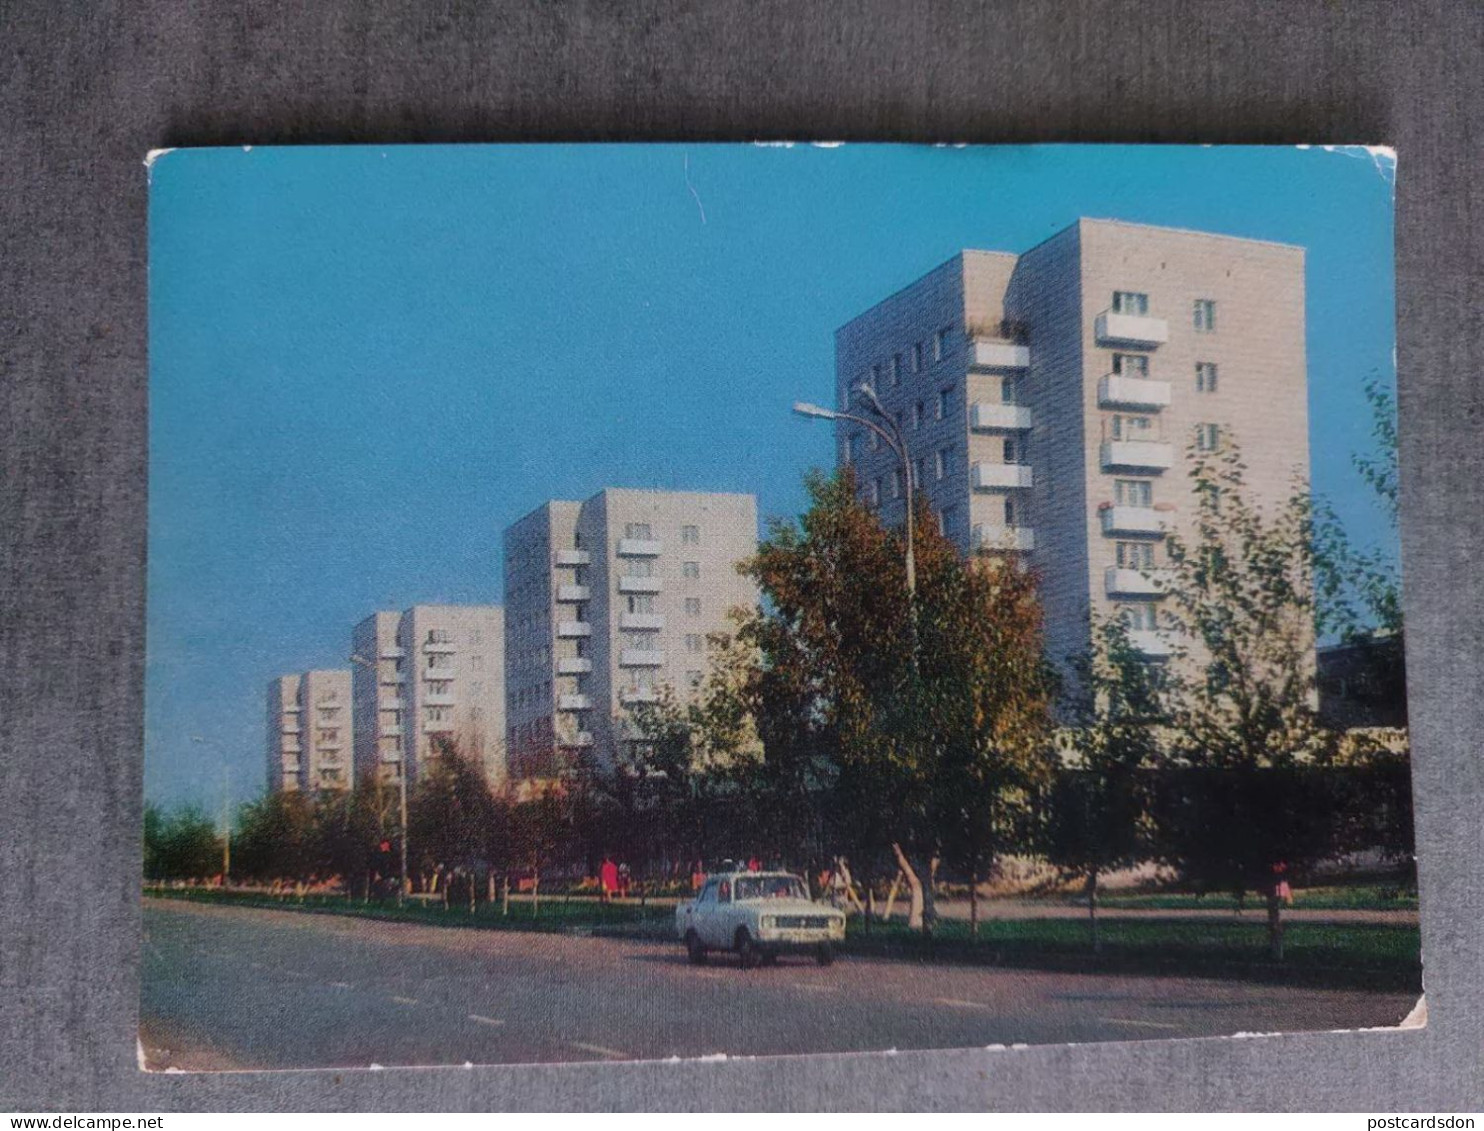 Soviet Architecture, KAZAKHSTAN. Zelinograd  - Lenin Prospect. 1979 Stationery Postcard - Kasachstan